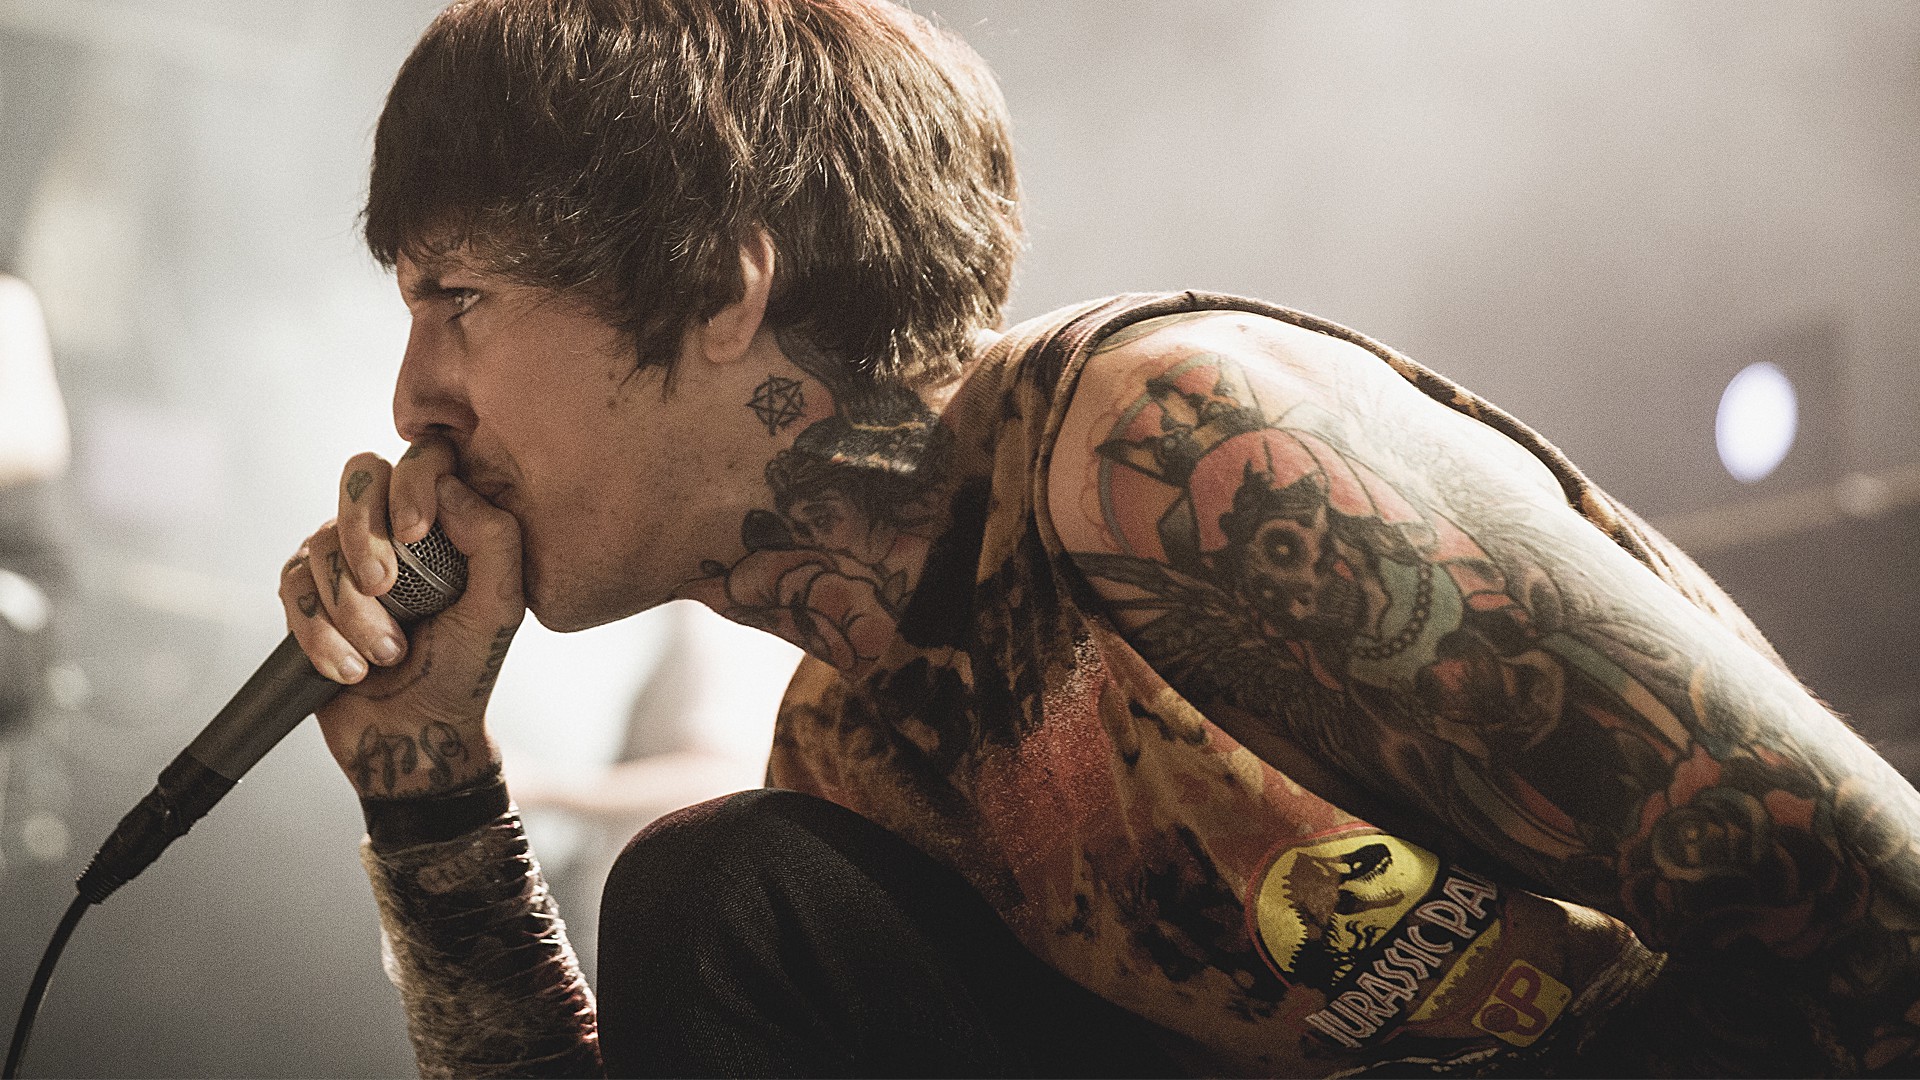 music rock singer tattooed free images